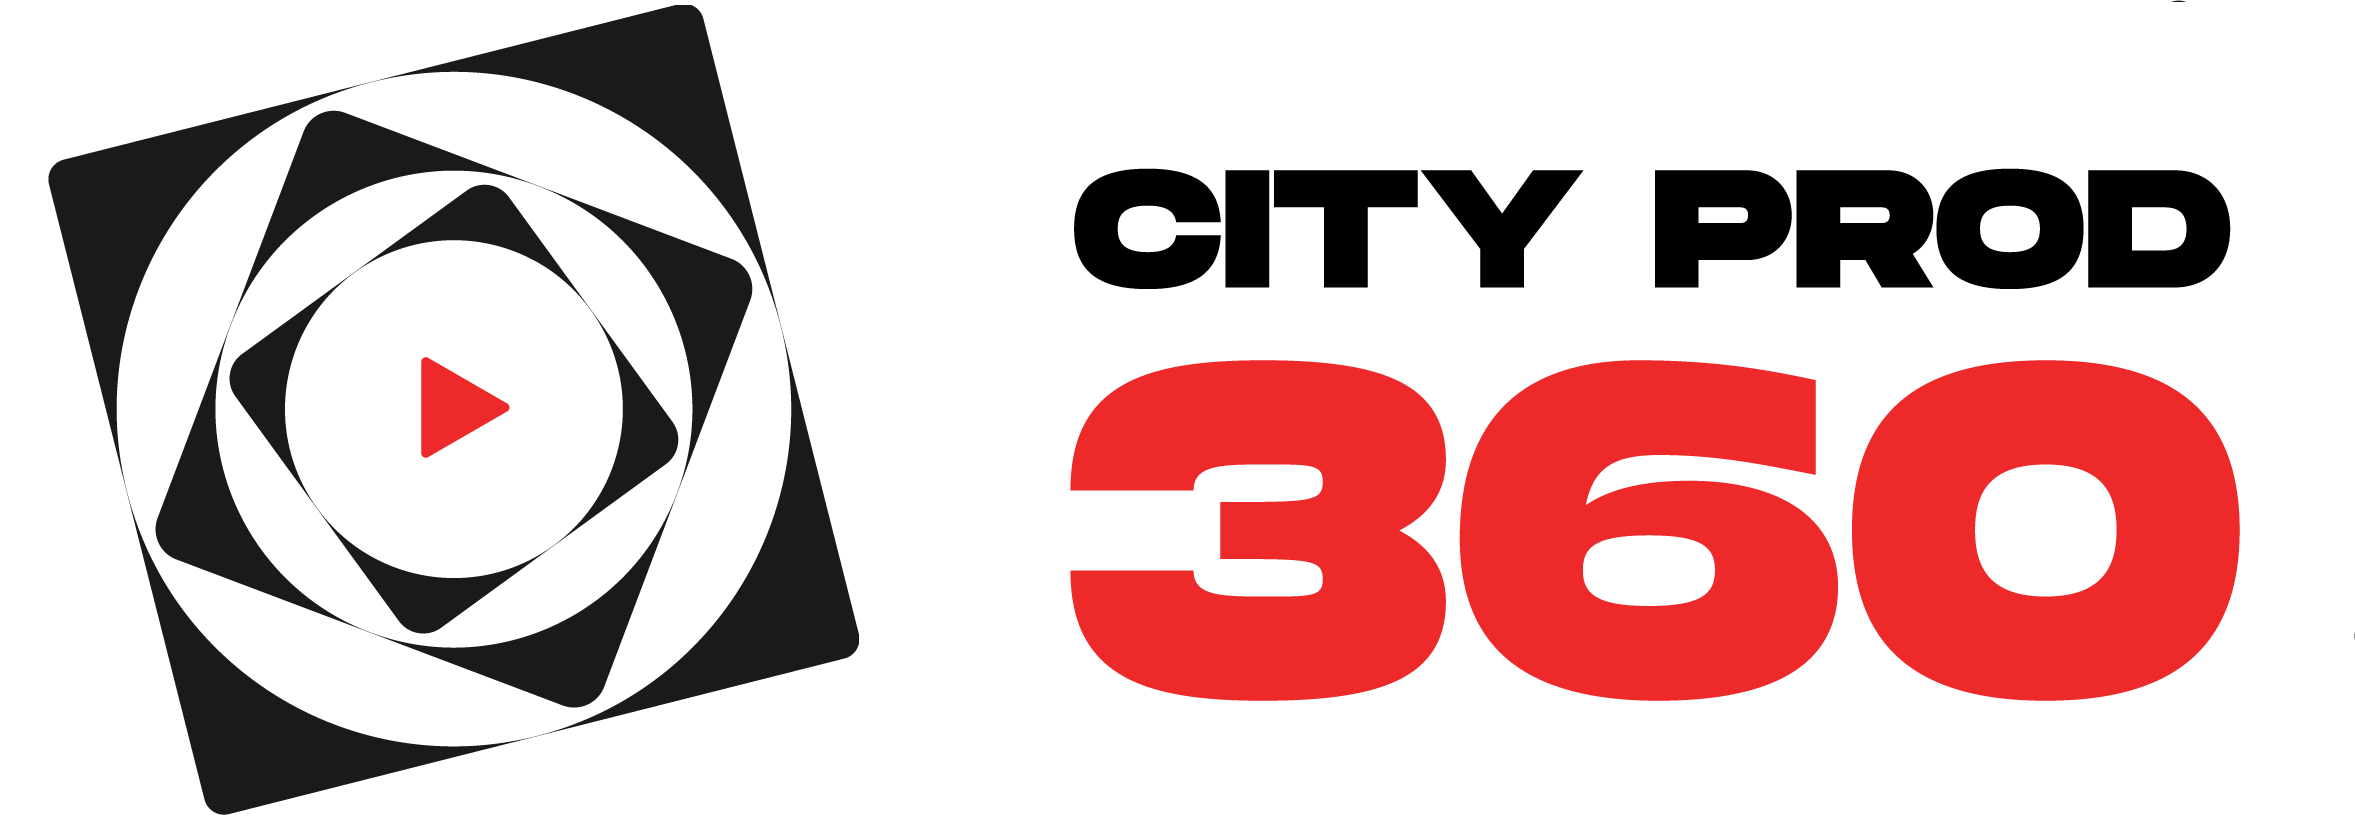 cityprod360-logo